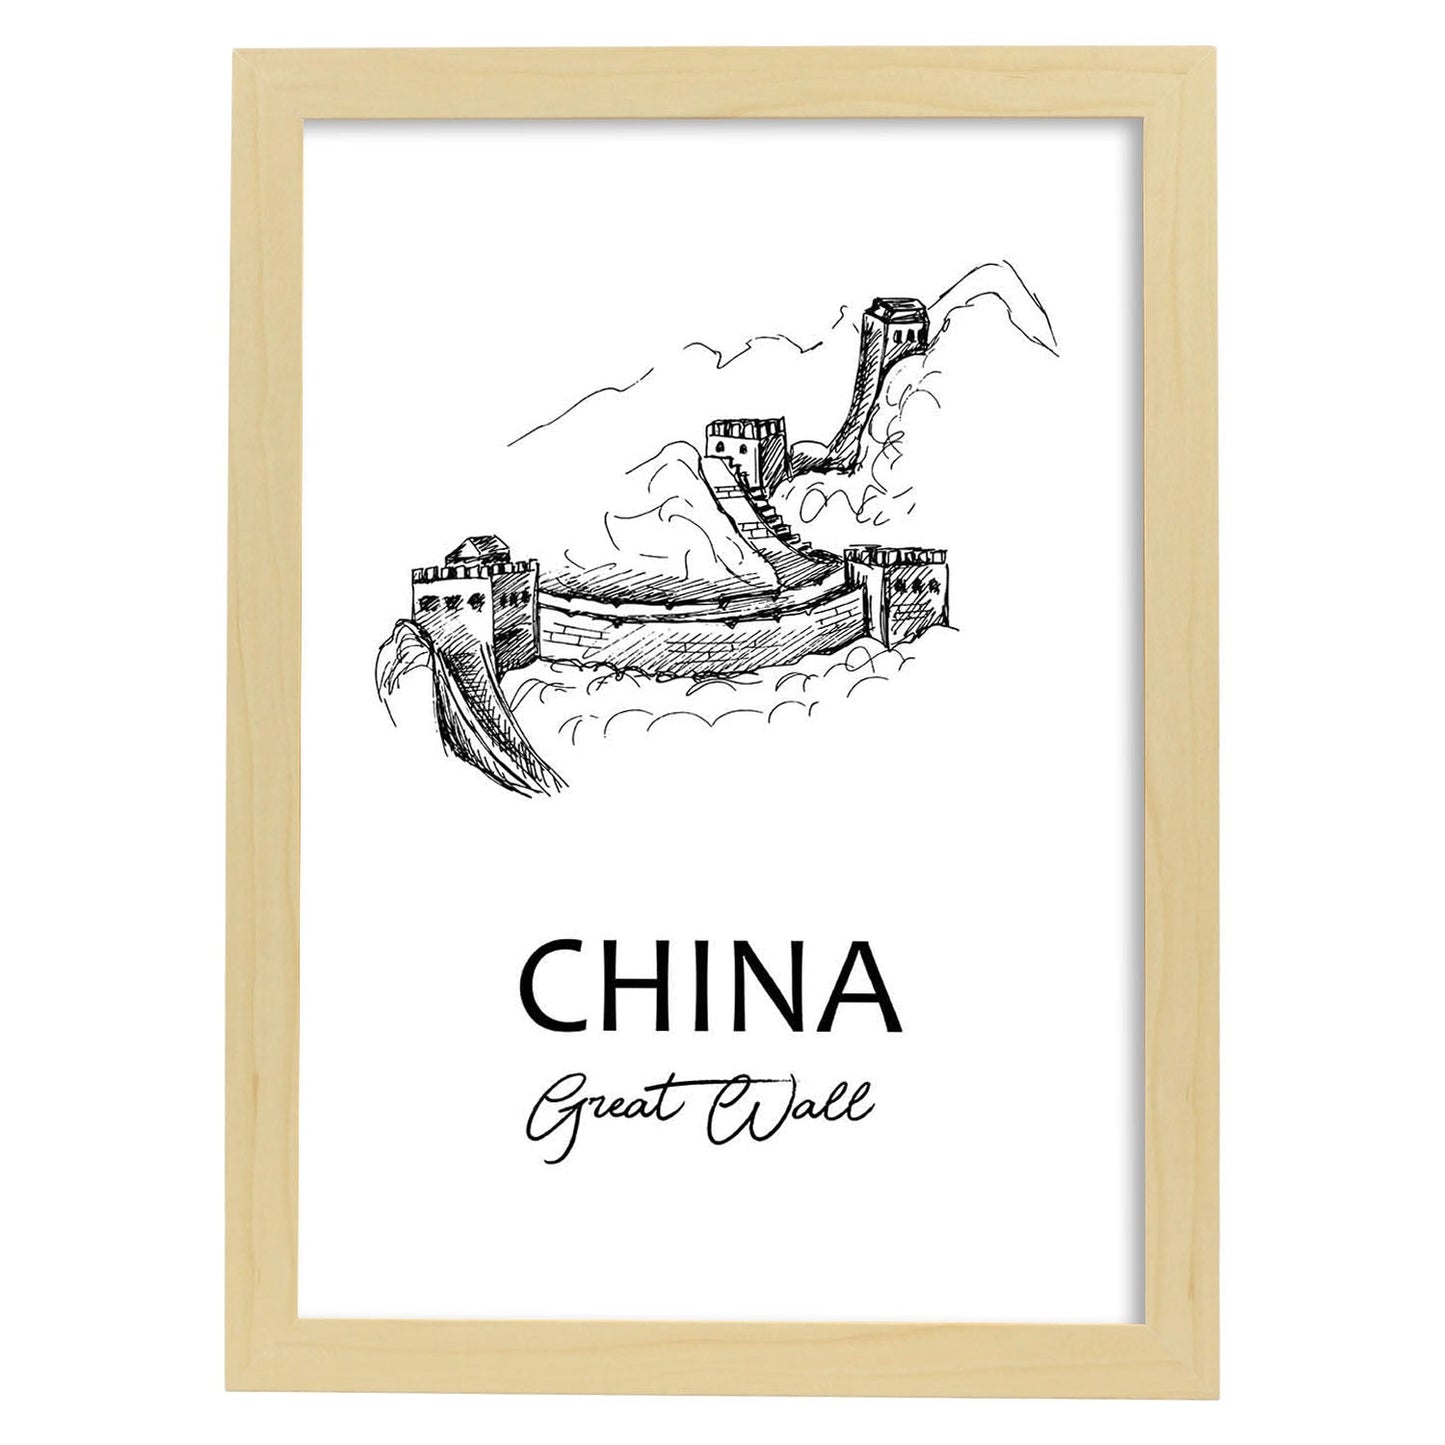 Poster de China - La gran muralla. Láminas con monumentos de ciudades.-Artwork-Nacnic-A4-Marco Madera clara-Nacnic Estudio SL